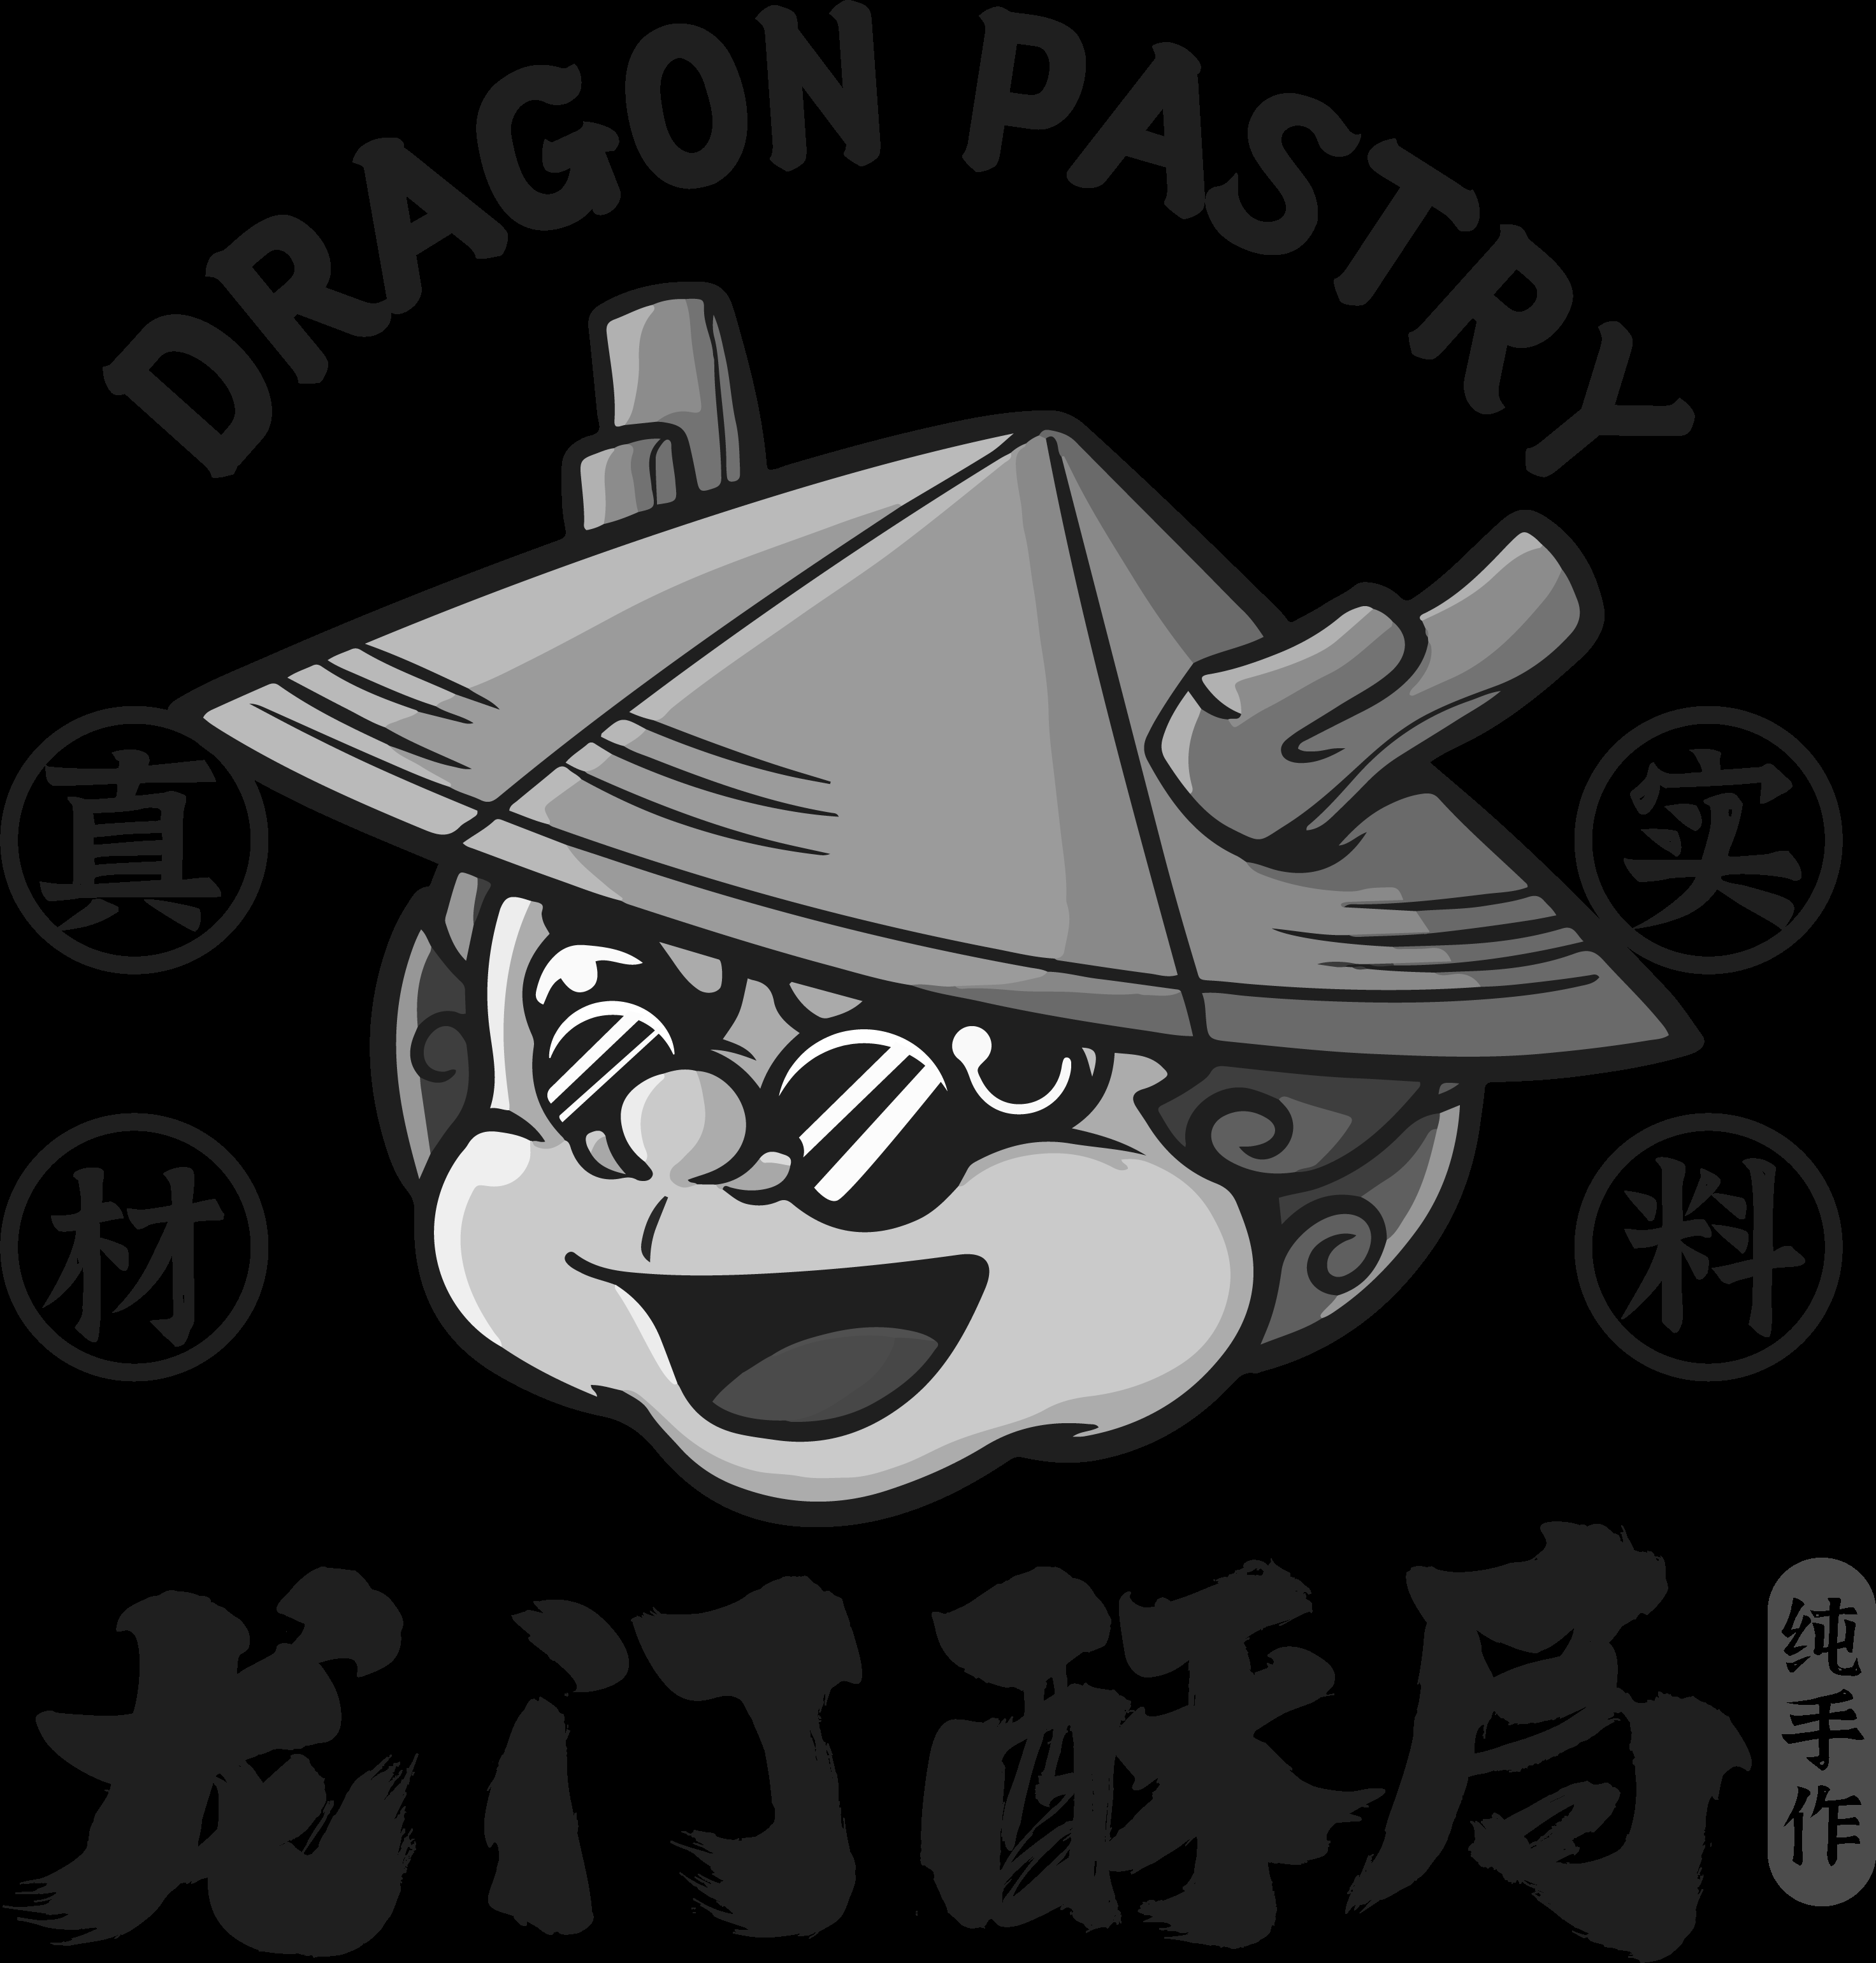 Dragon Pastry